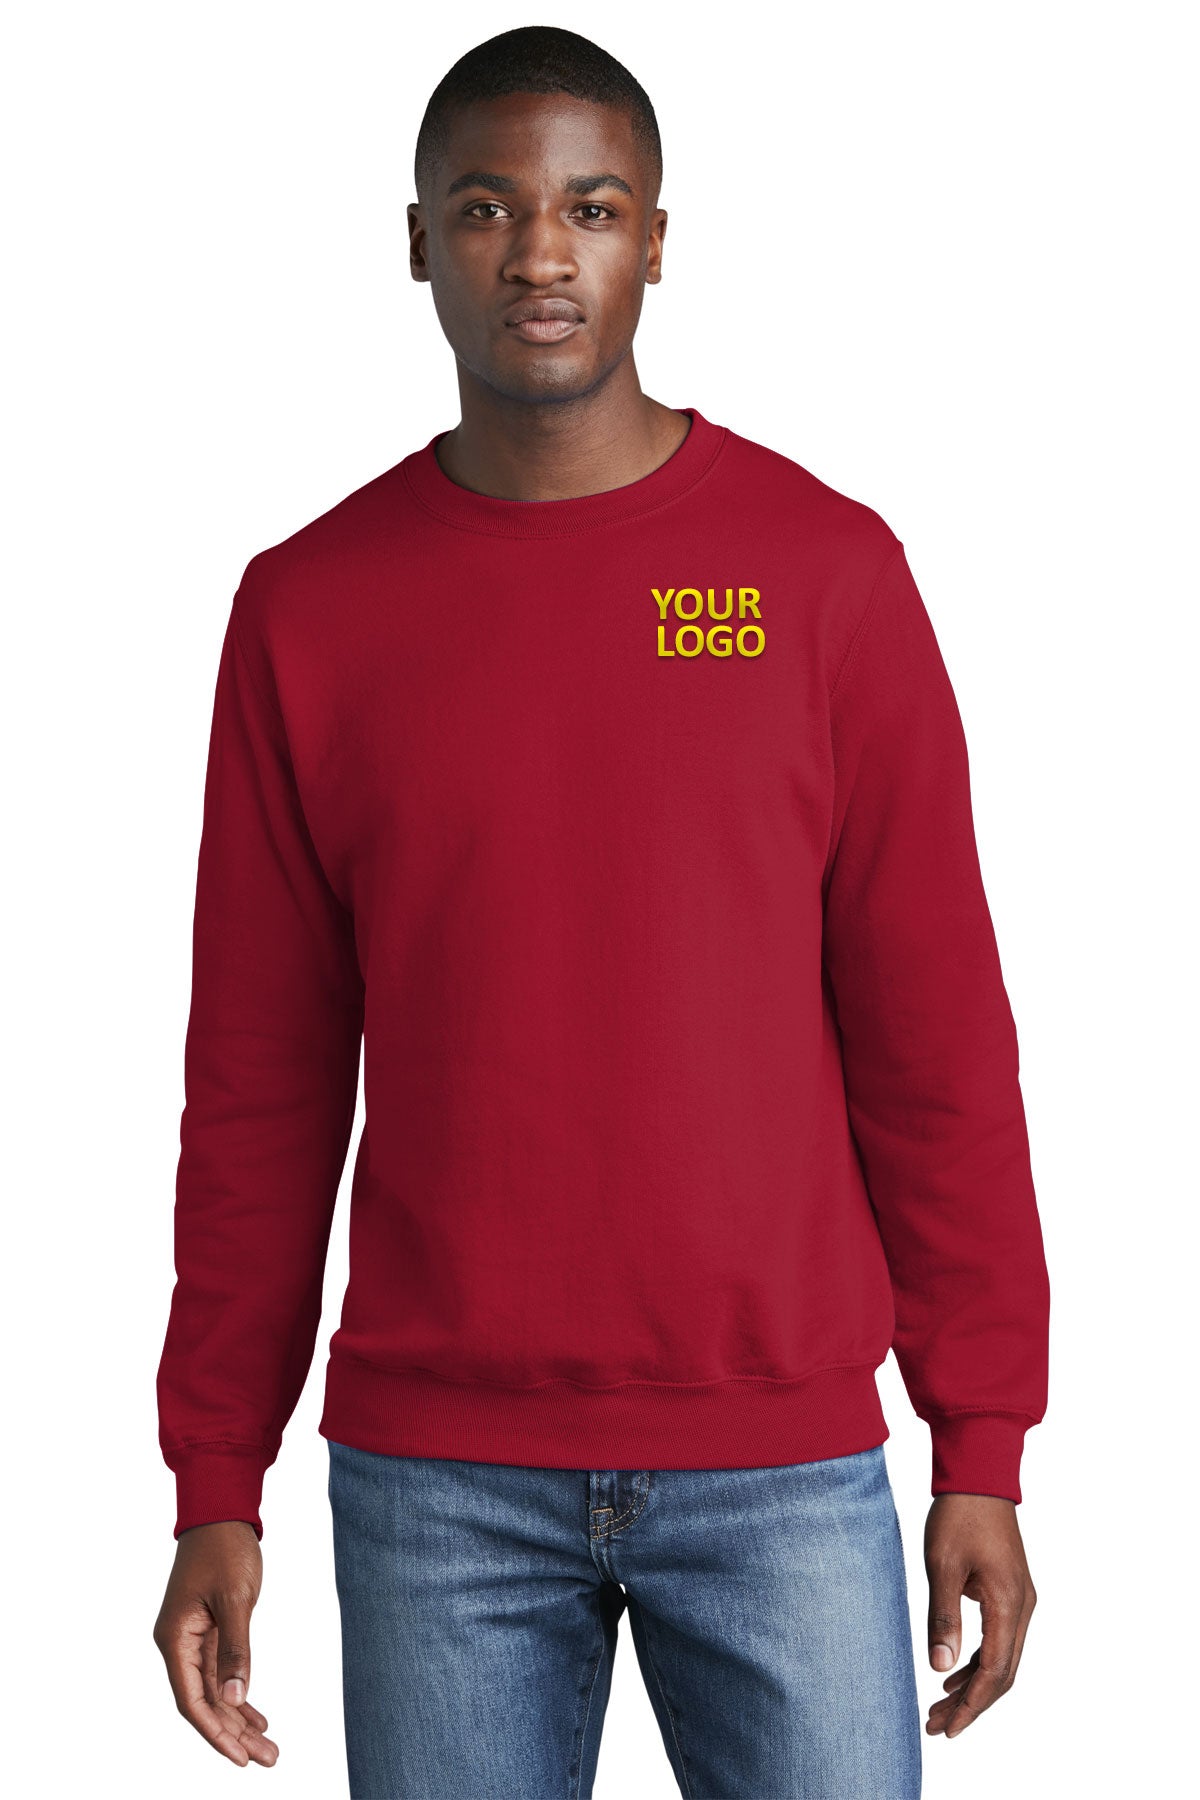 port & company red pc78 company sweatshirts embroidered